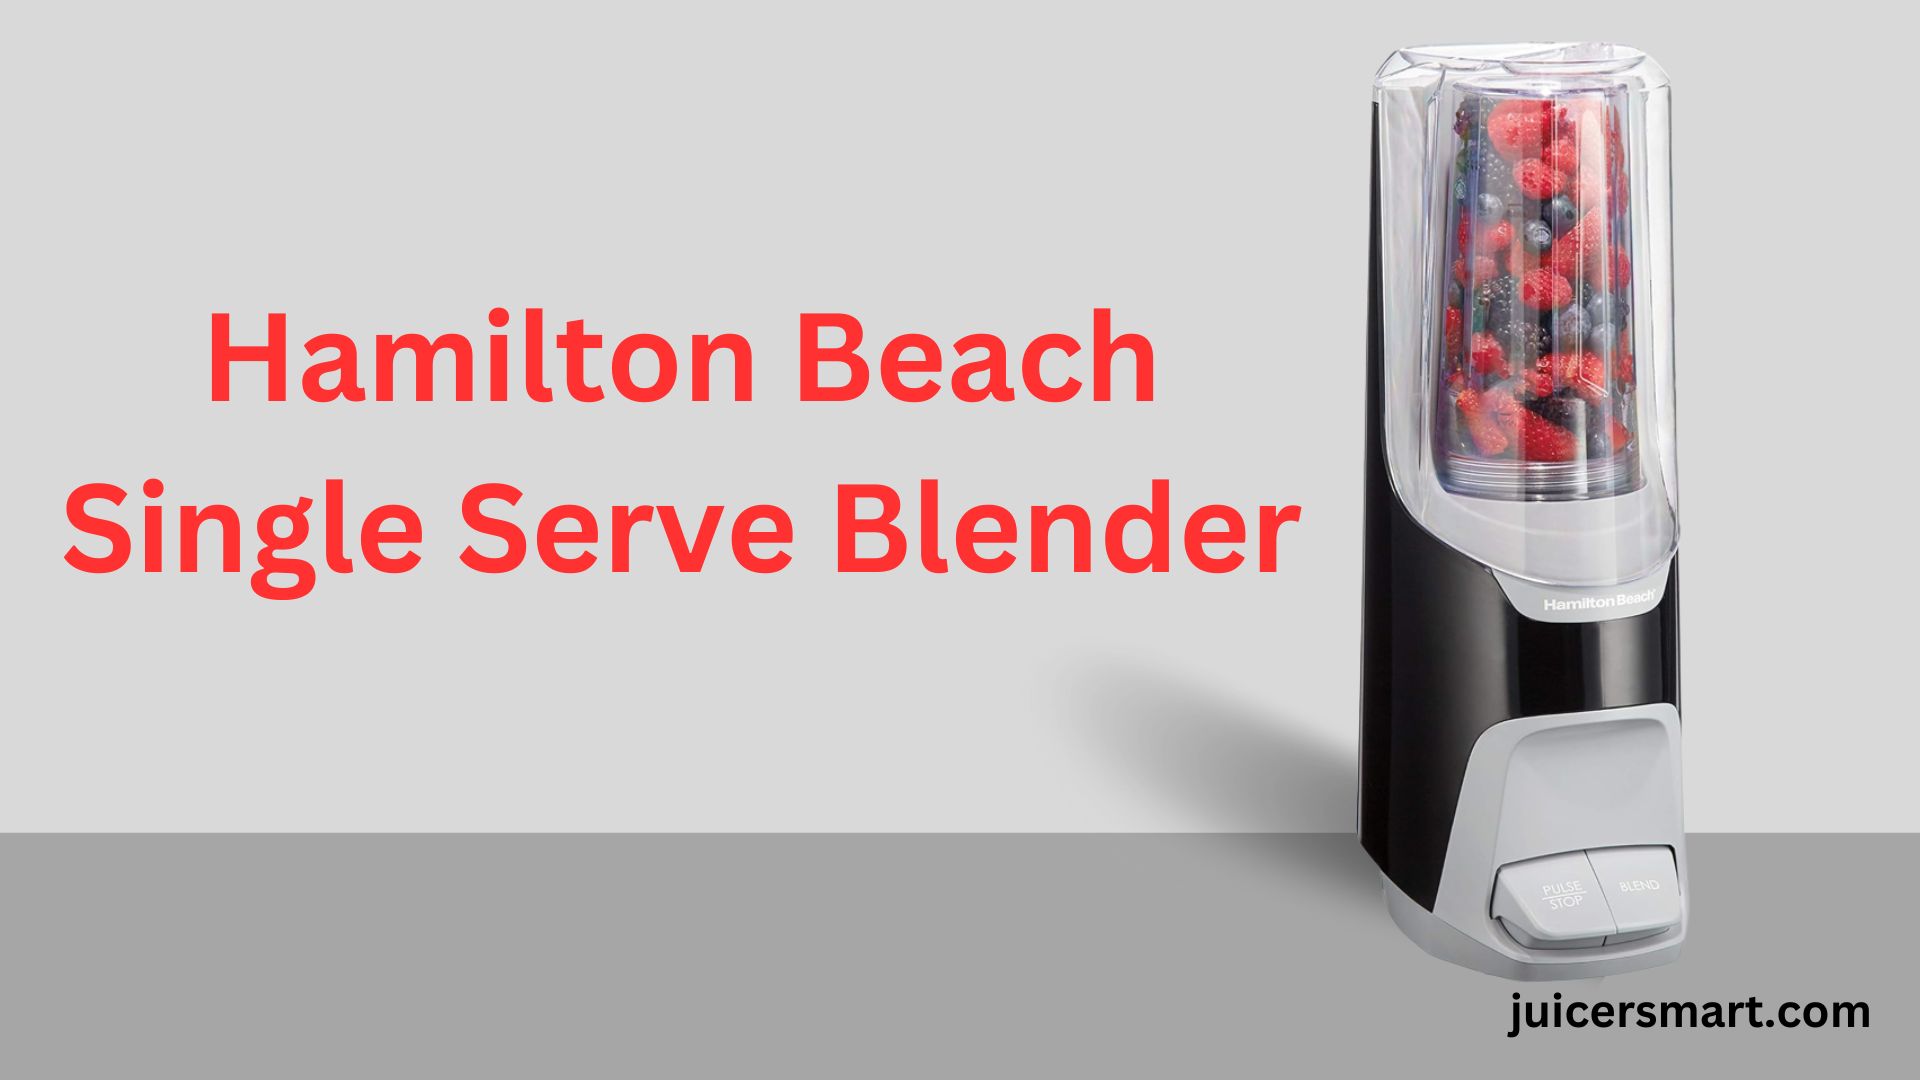 Hamilton Beach Single Serve Blender